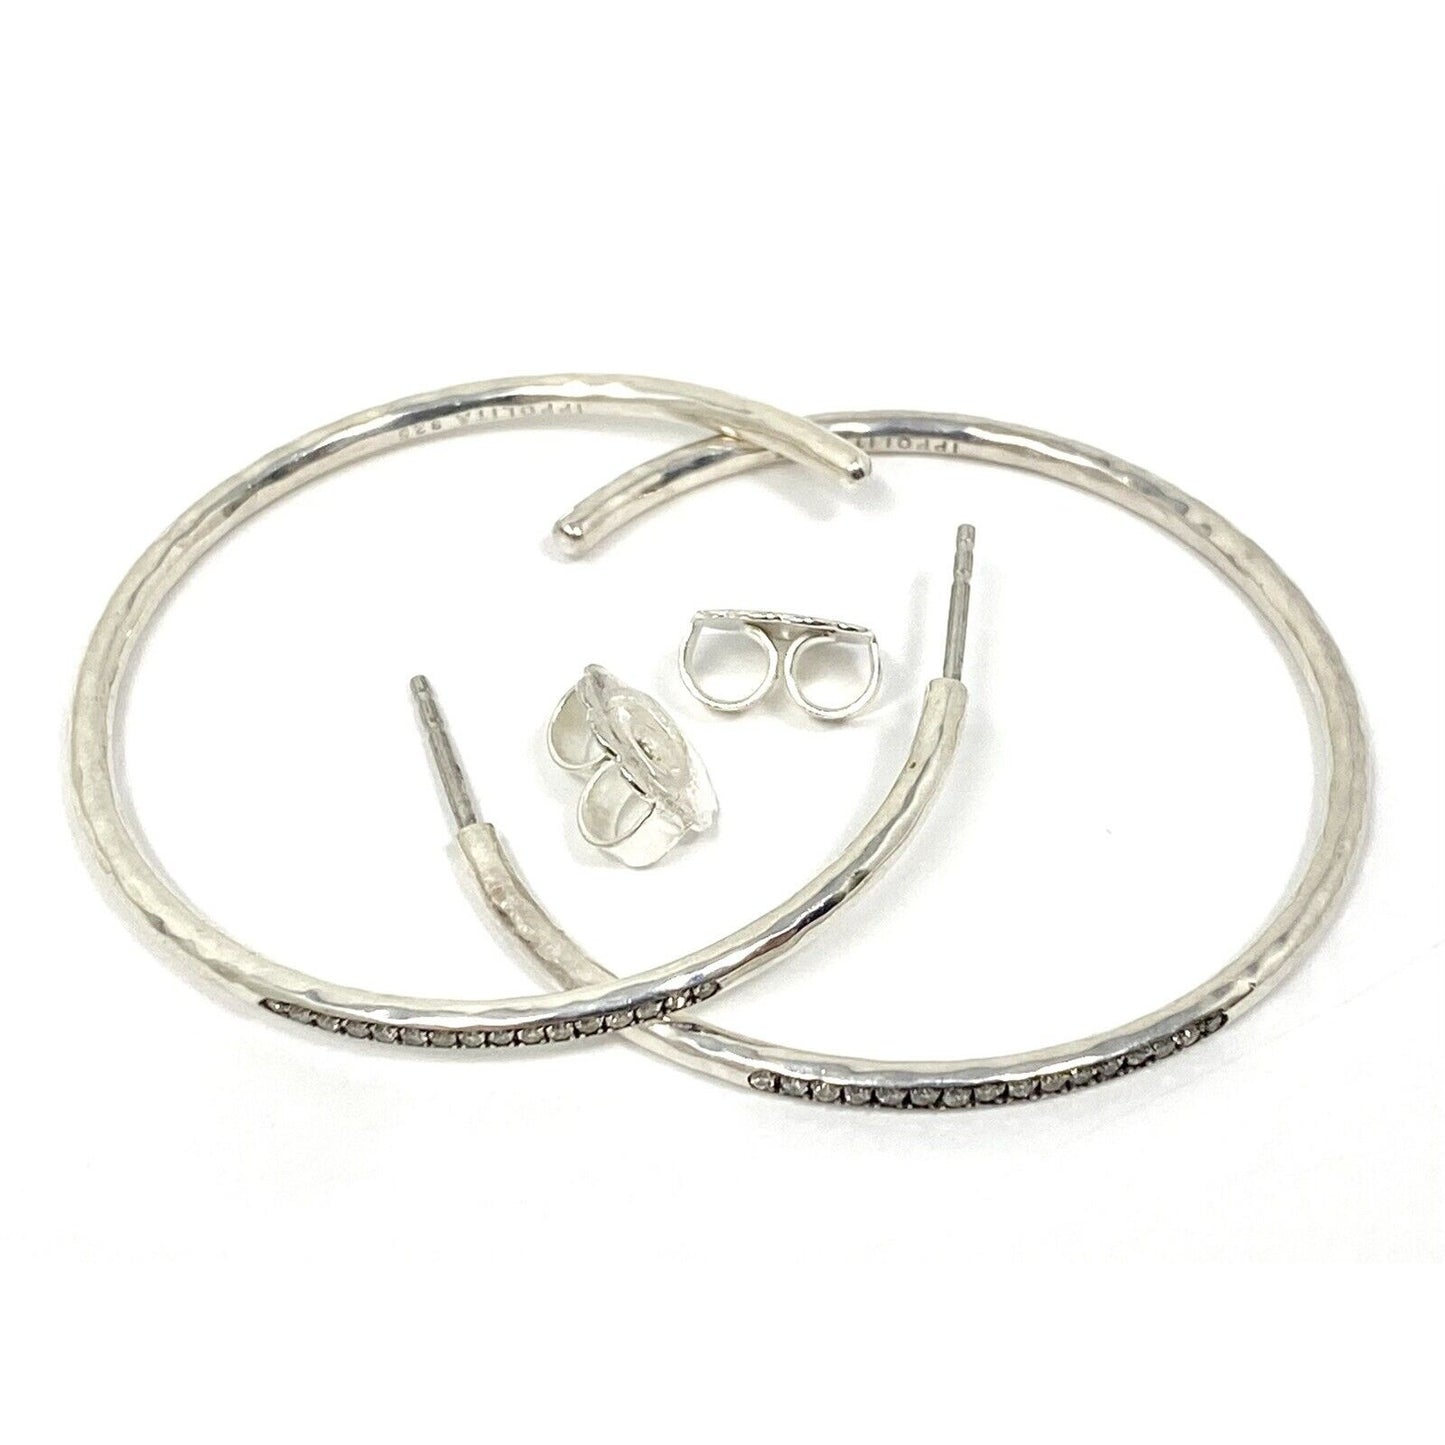 IPPOLITA Hammered 925 Sterling Silver Diamond Front Large Hoop Earrings